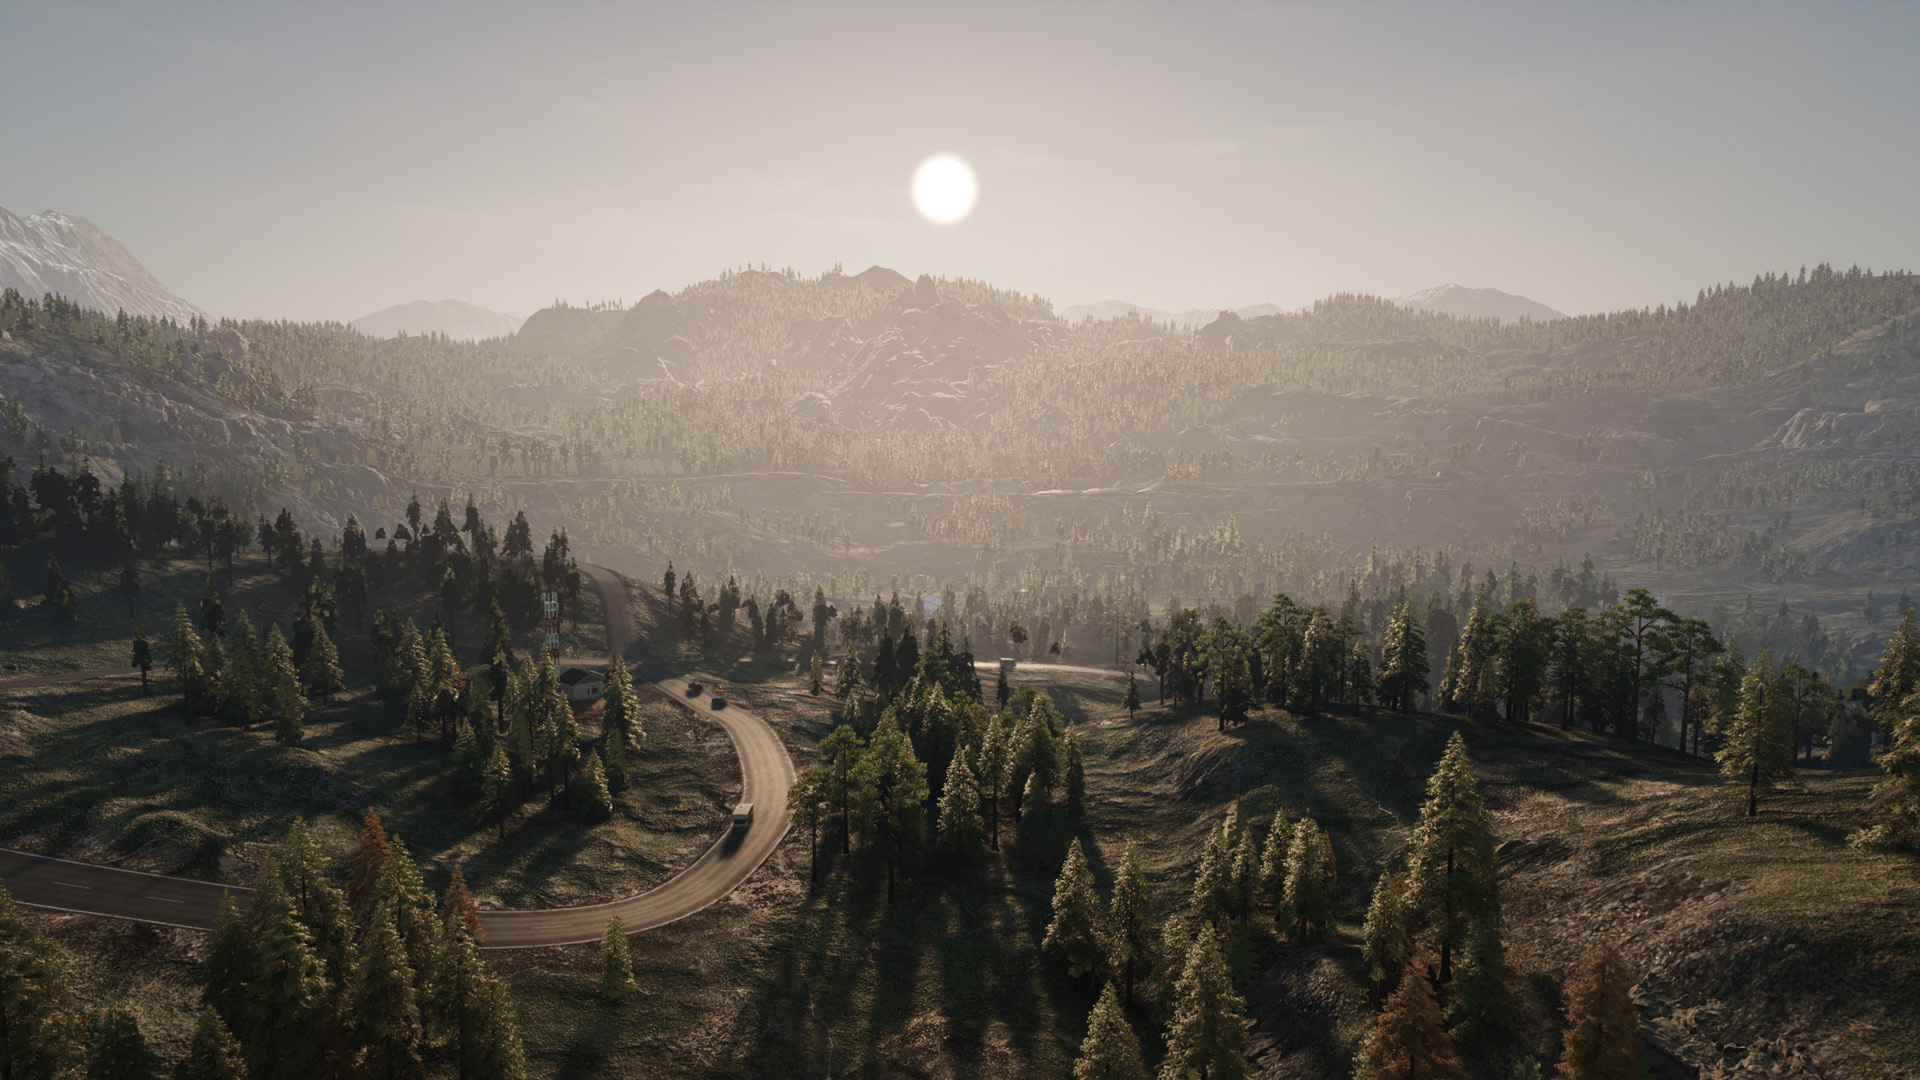 Ranch Simulator - Build, Farm, Hunt (Unreal Engine 5) 